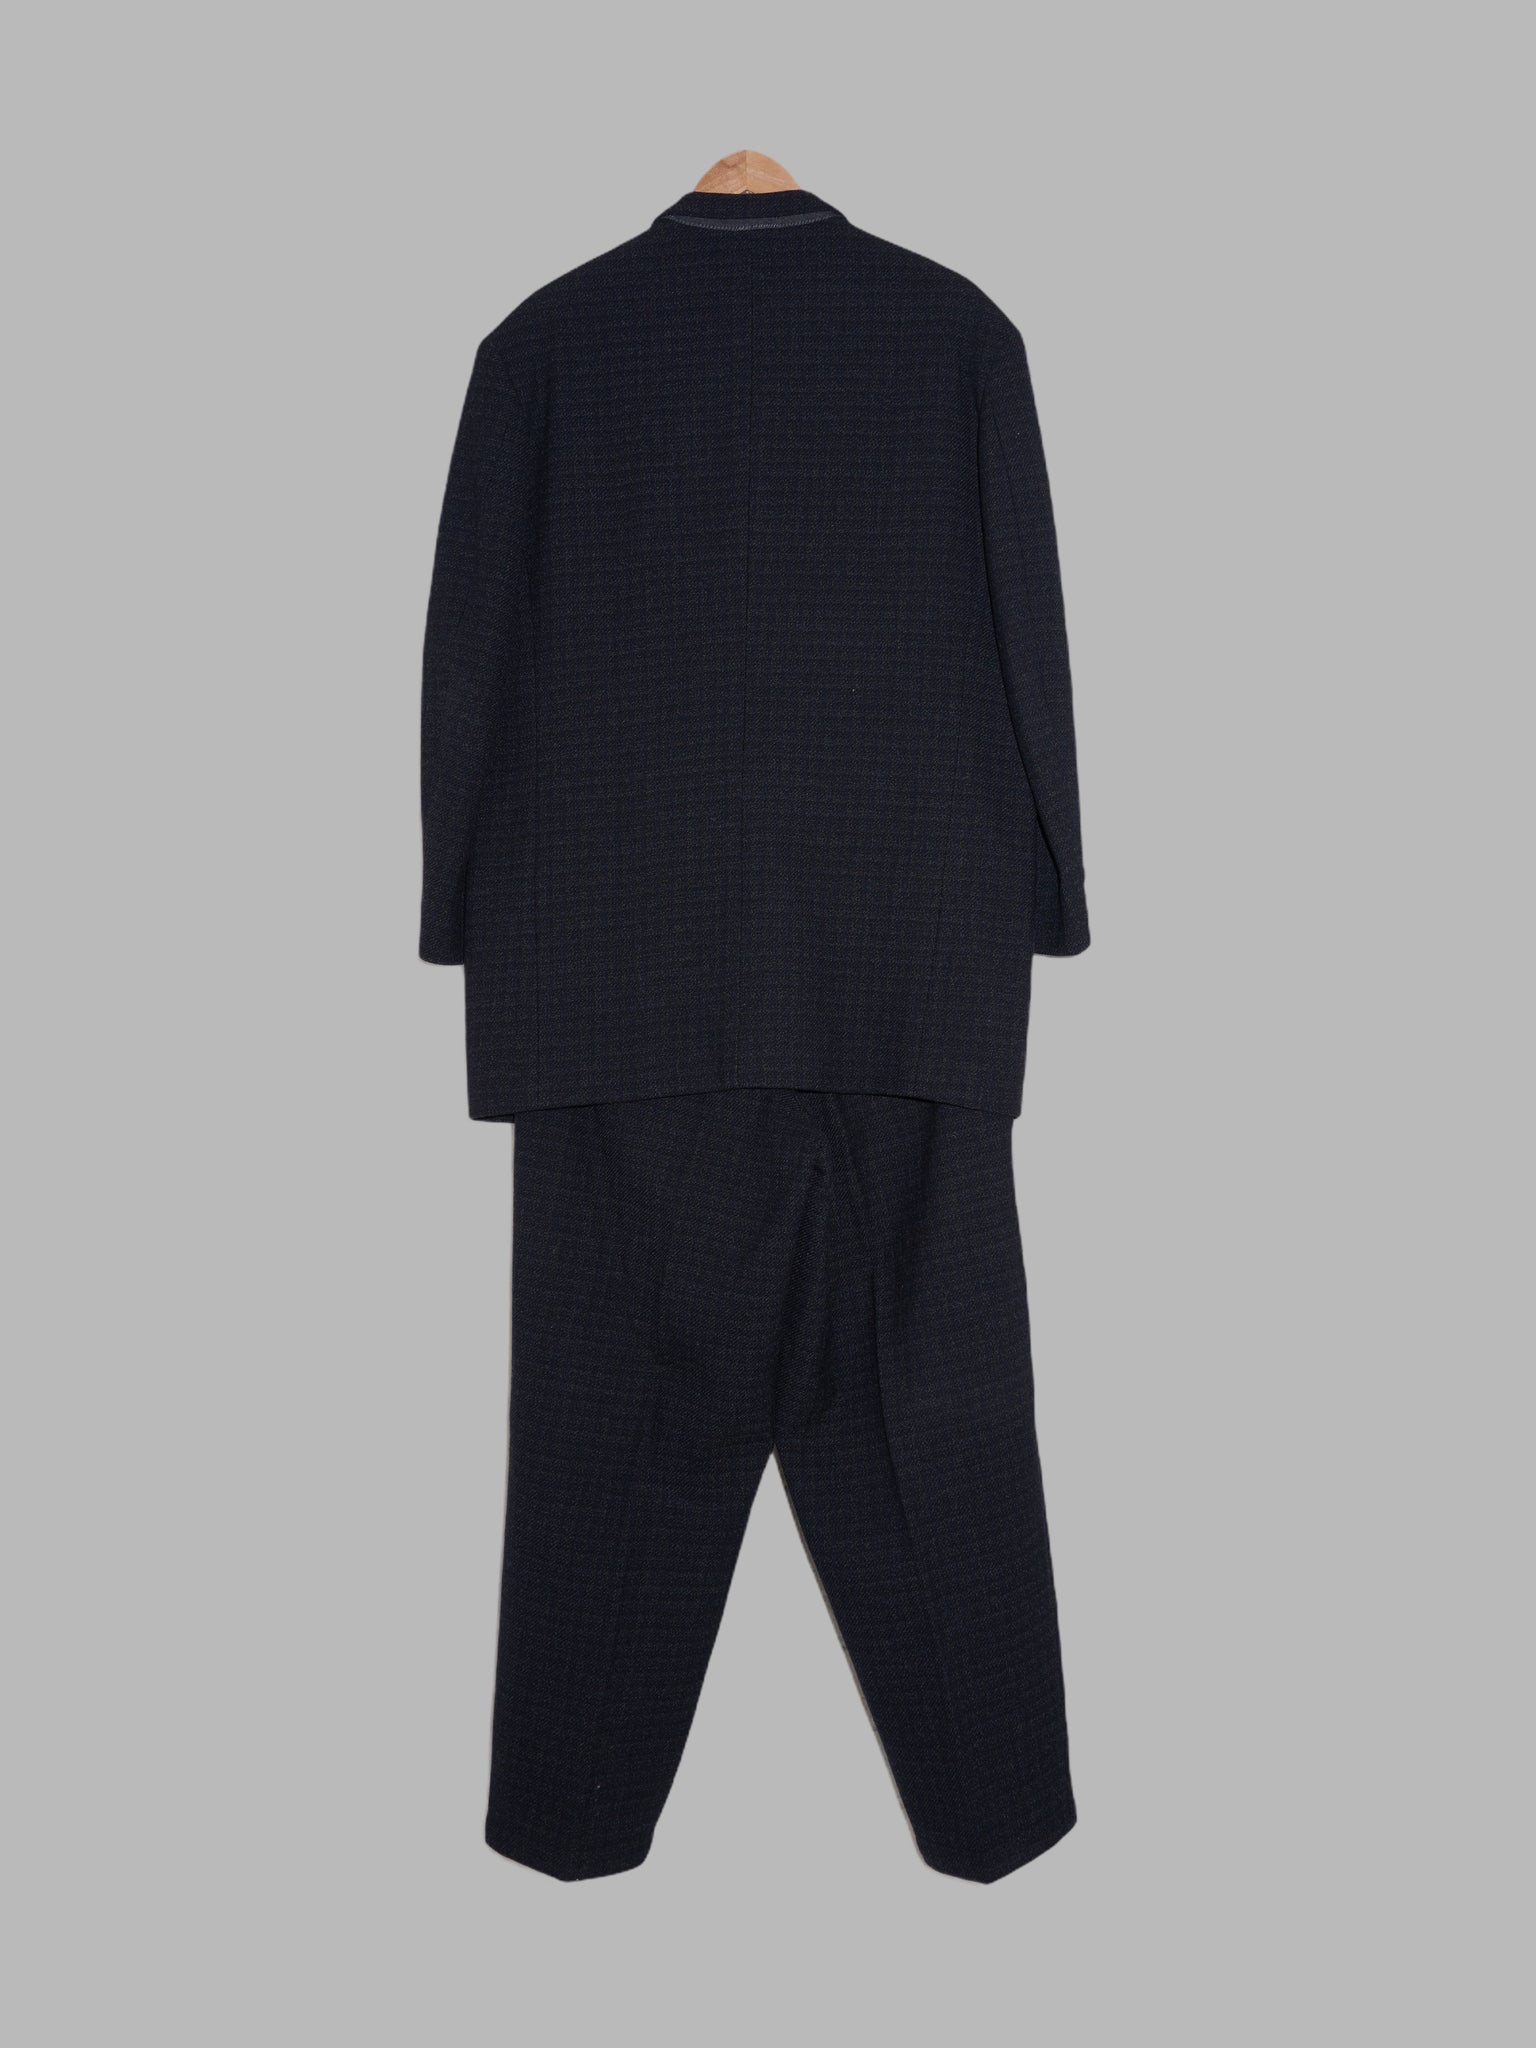 Y's for Men Yohji Yamamoto dark navy wool check coat and trouser suit - S M